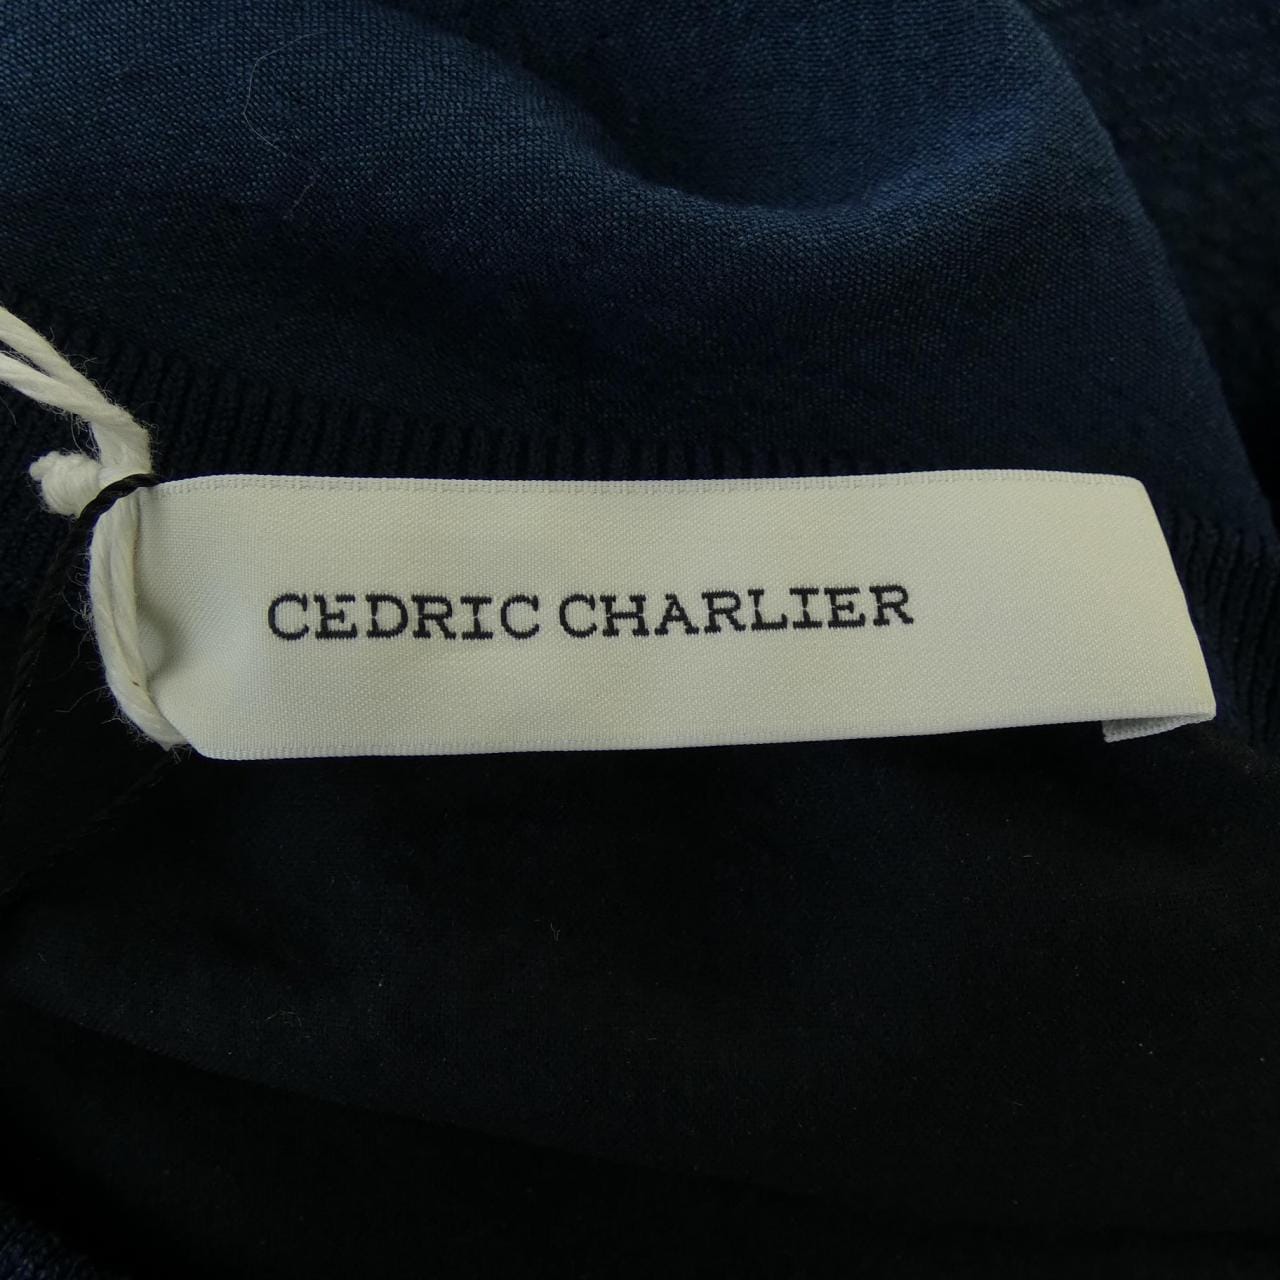 CEDRIC CHARLIER CEDRIC CHARLIER トップス